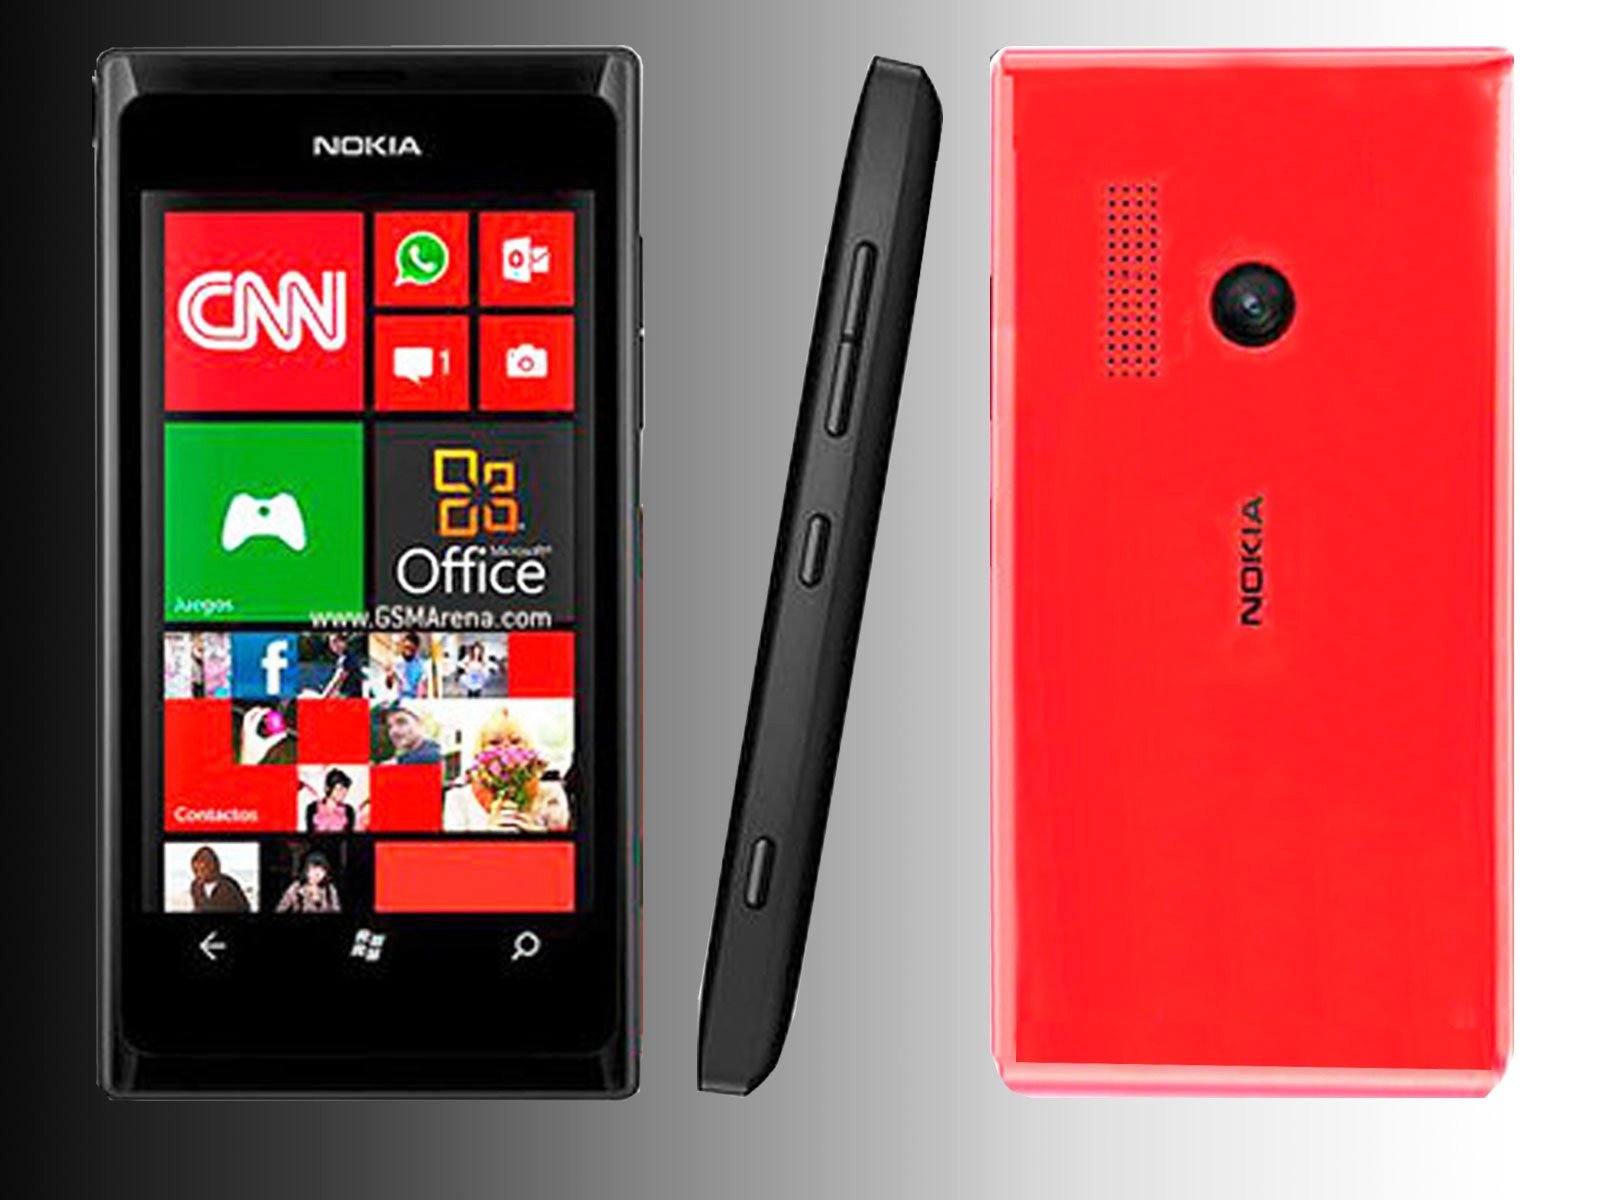 Nokia Lumia 505 specs, review, release date - PhonesData